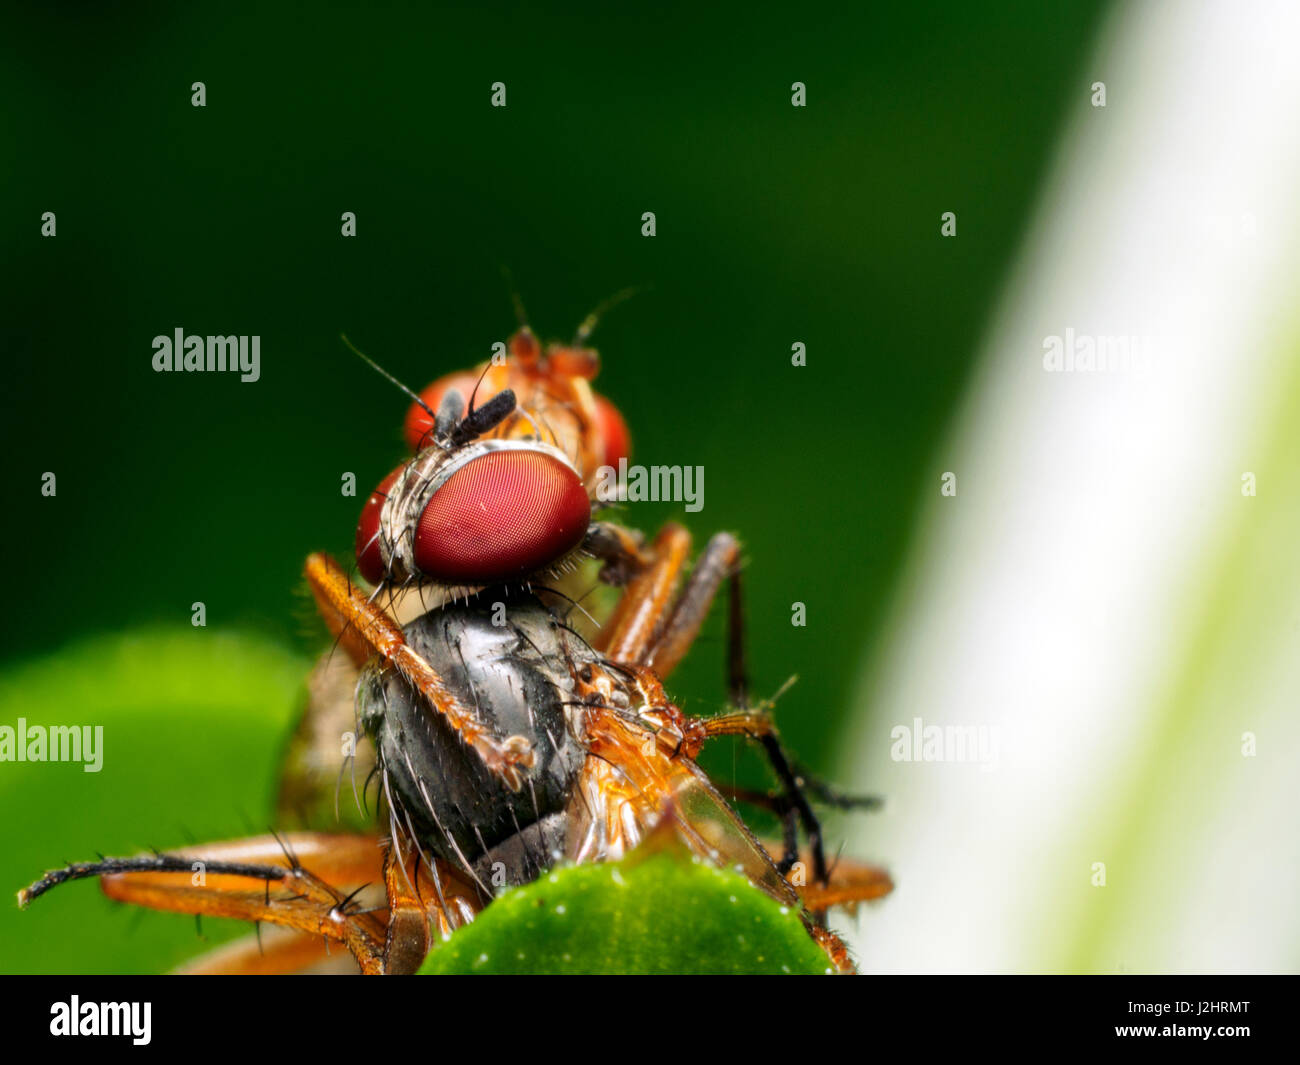 Two flies fighting (Musca domestica vs Scathophaga inquinata) - London, England Stock Photo